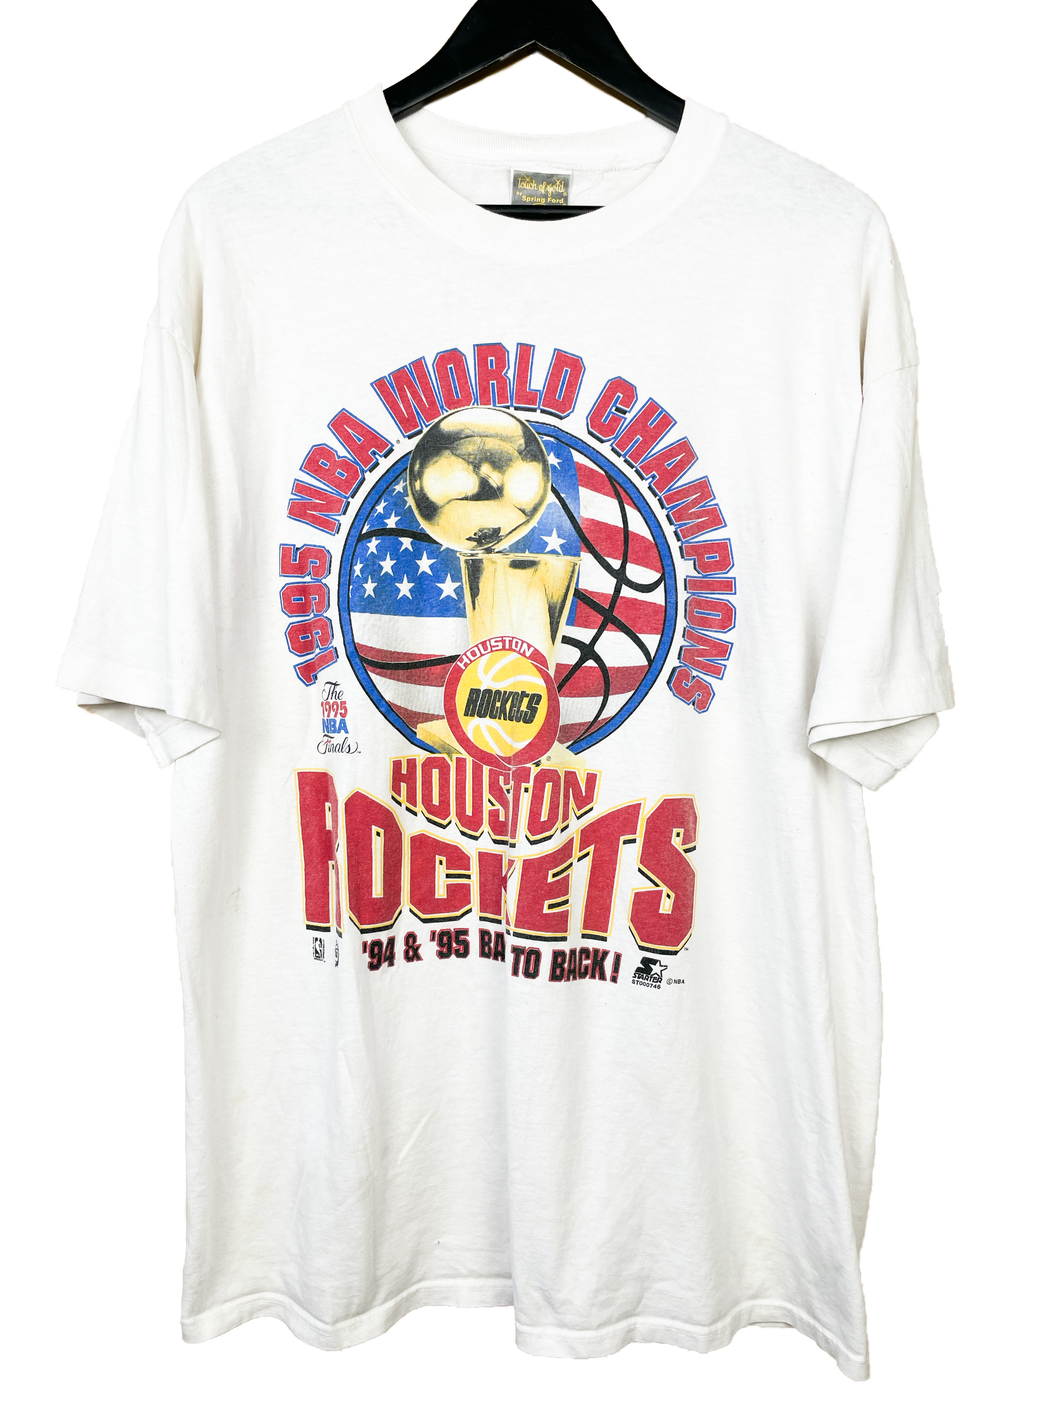 1995 HOUSTON ROCKETS NBA CHAMPS 'SS' TEE - XL